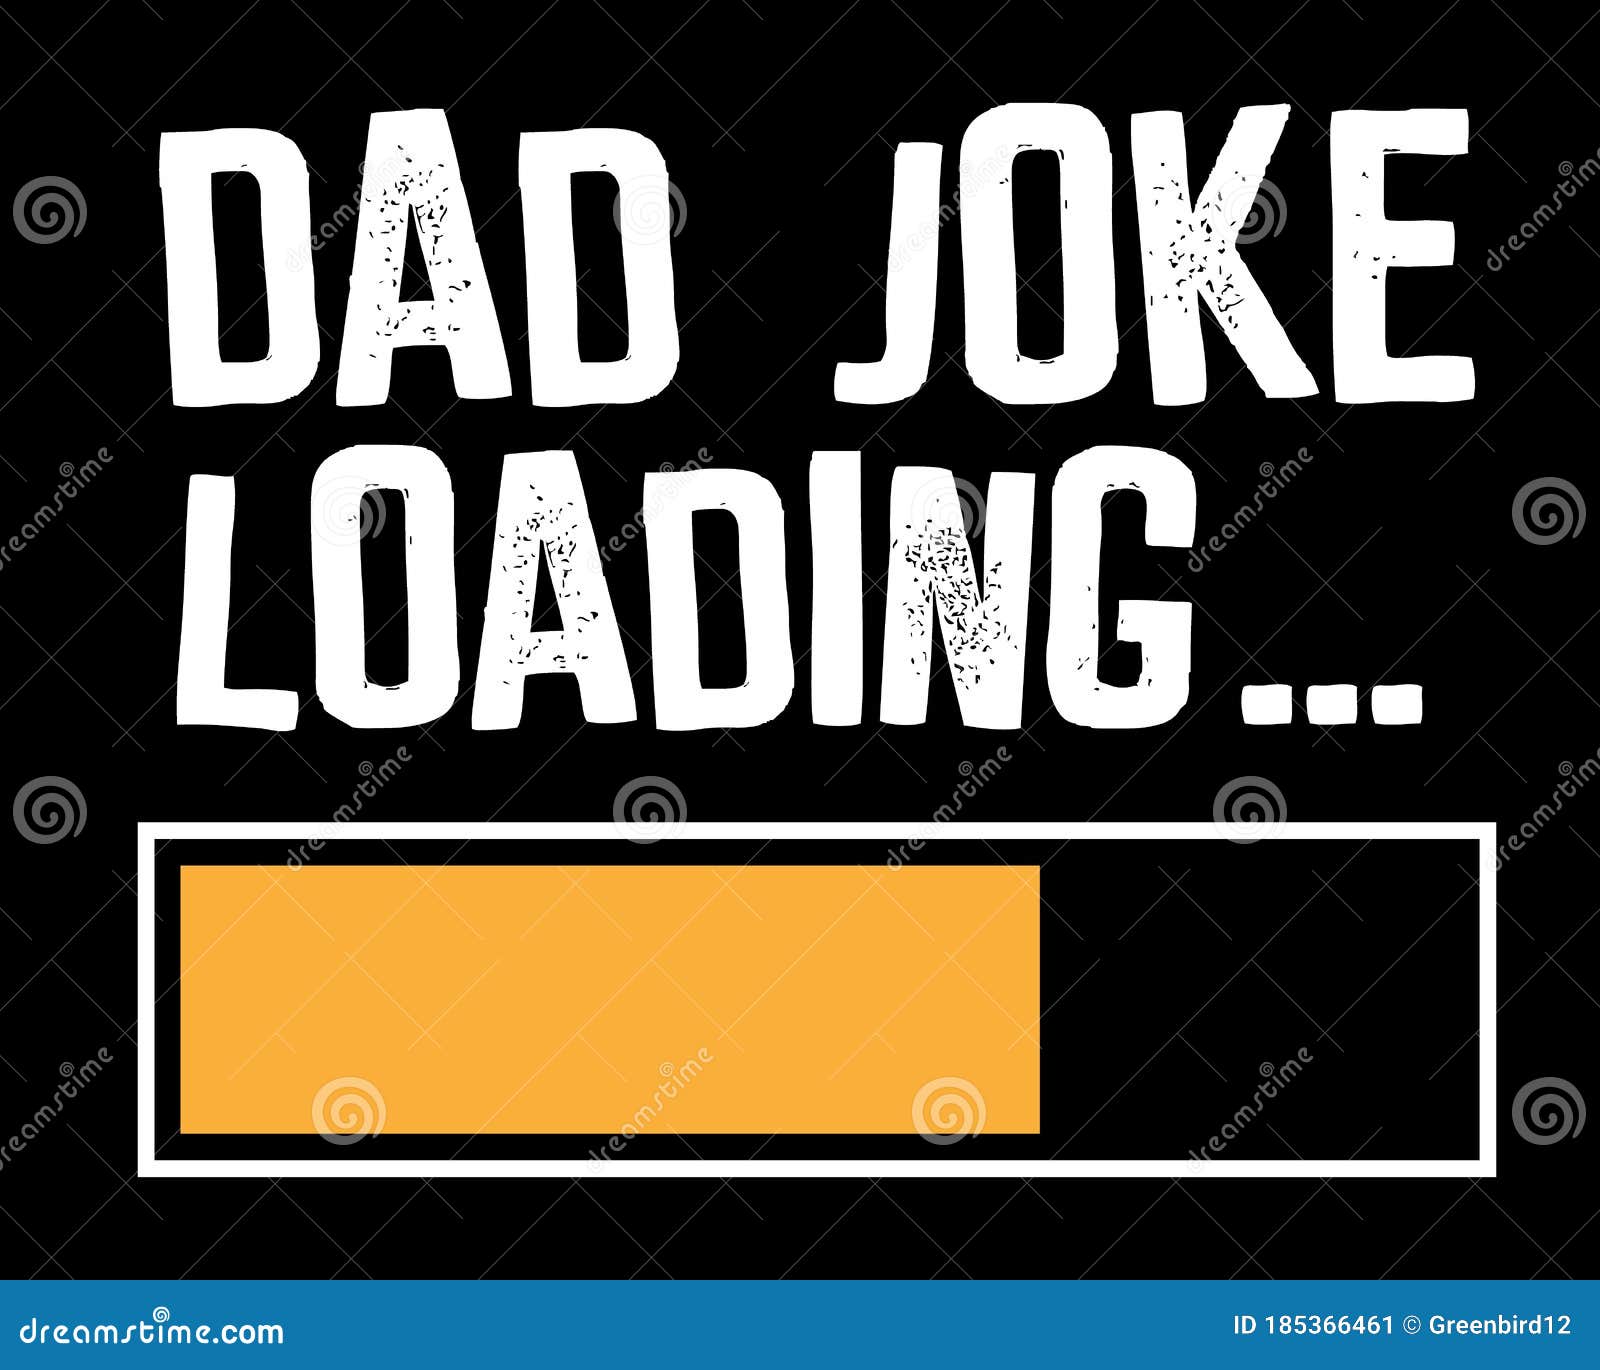 dad joke loading / funny text tshirt  poster   art